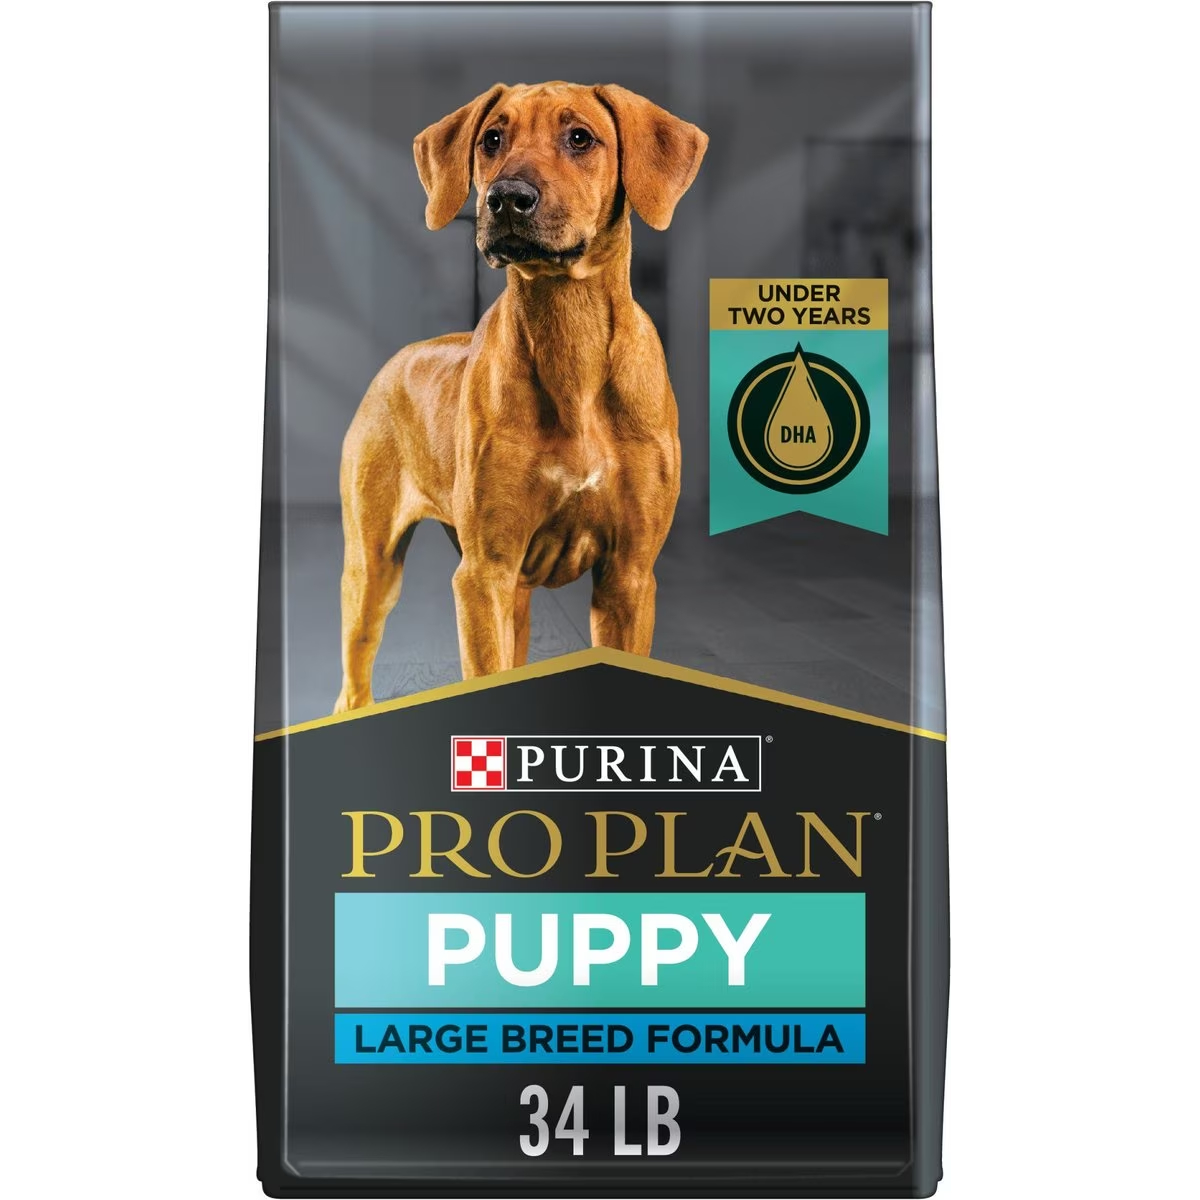 Purina Pro Plan Puppy Dog Food